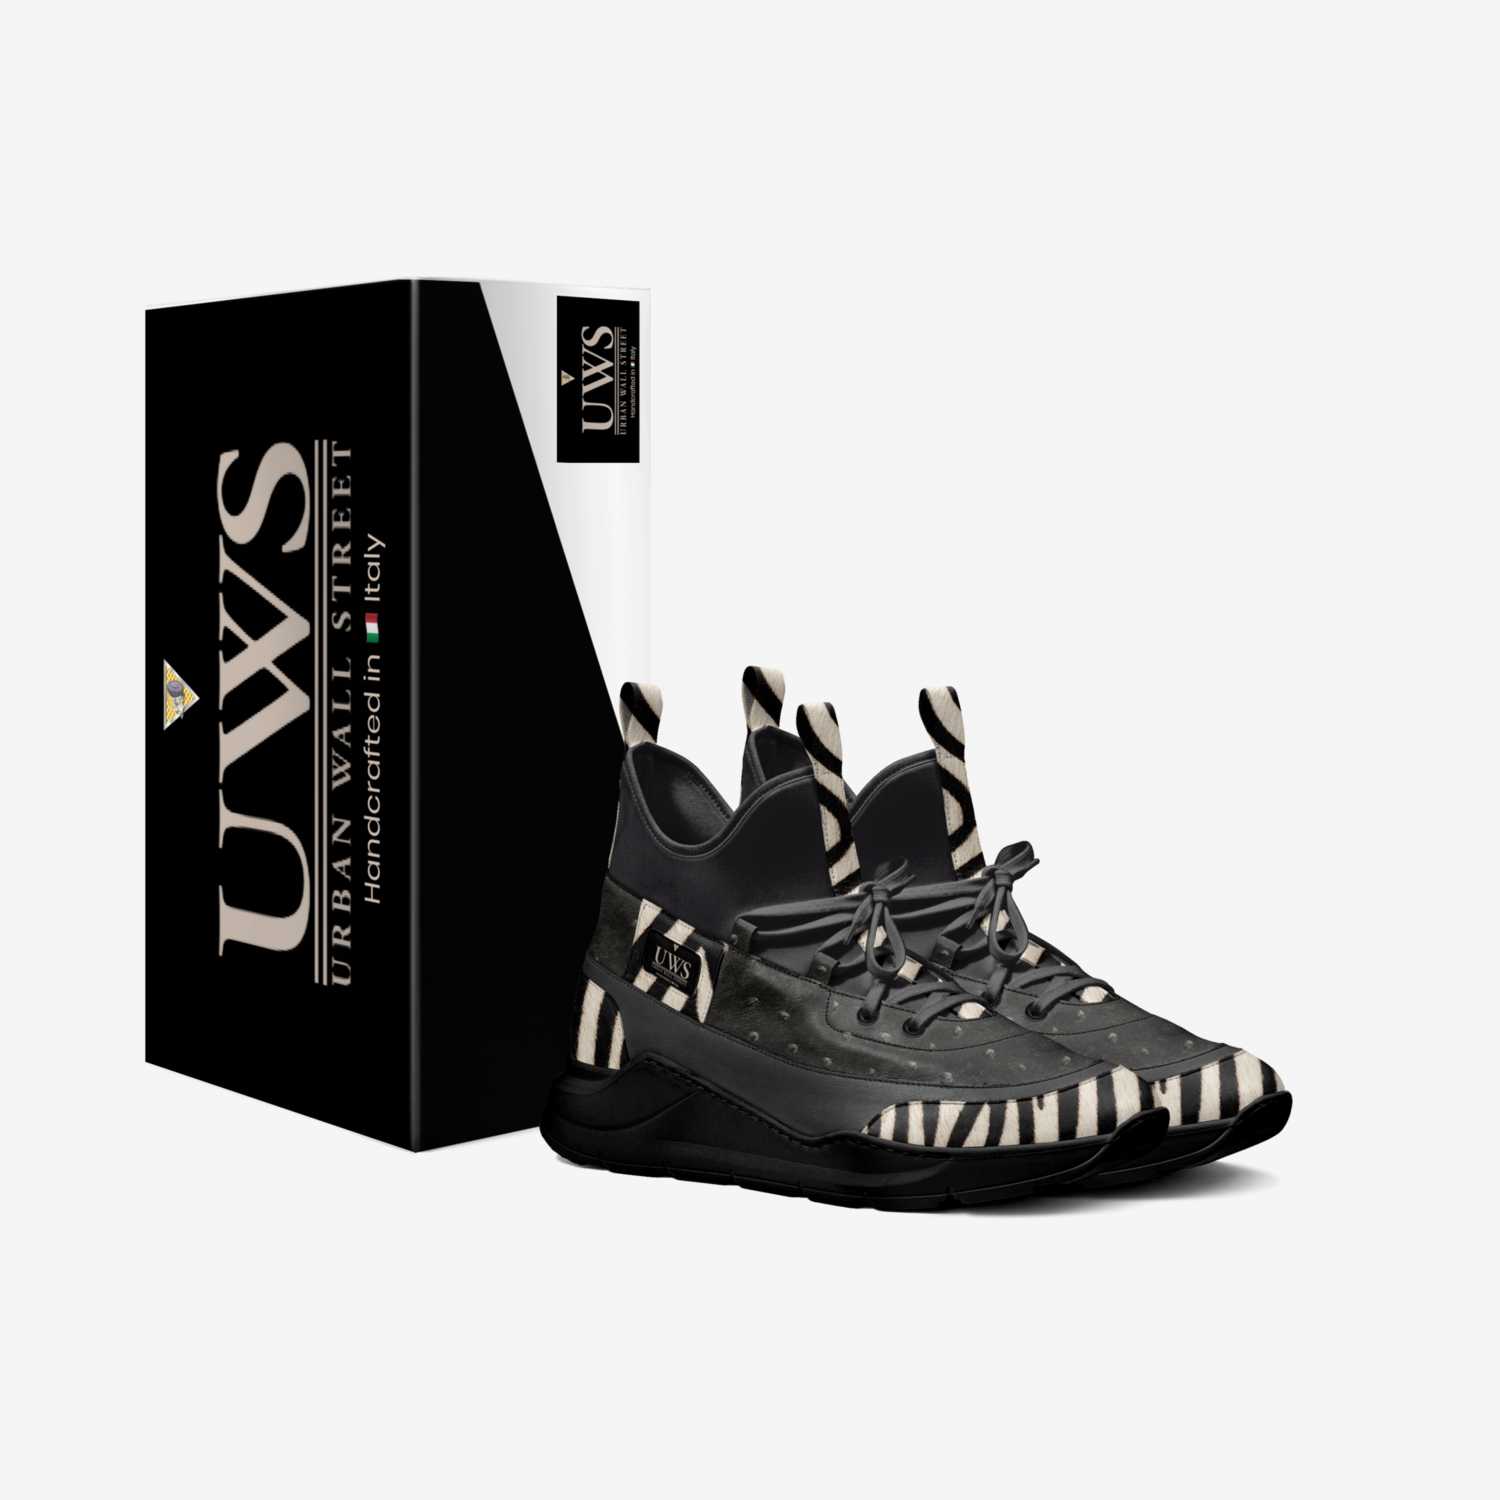  BLACK ZEBRAZ custom made in Italy shoes by Urbanwallstreet Earl | Box view